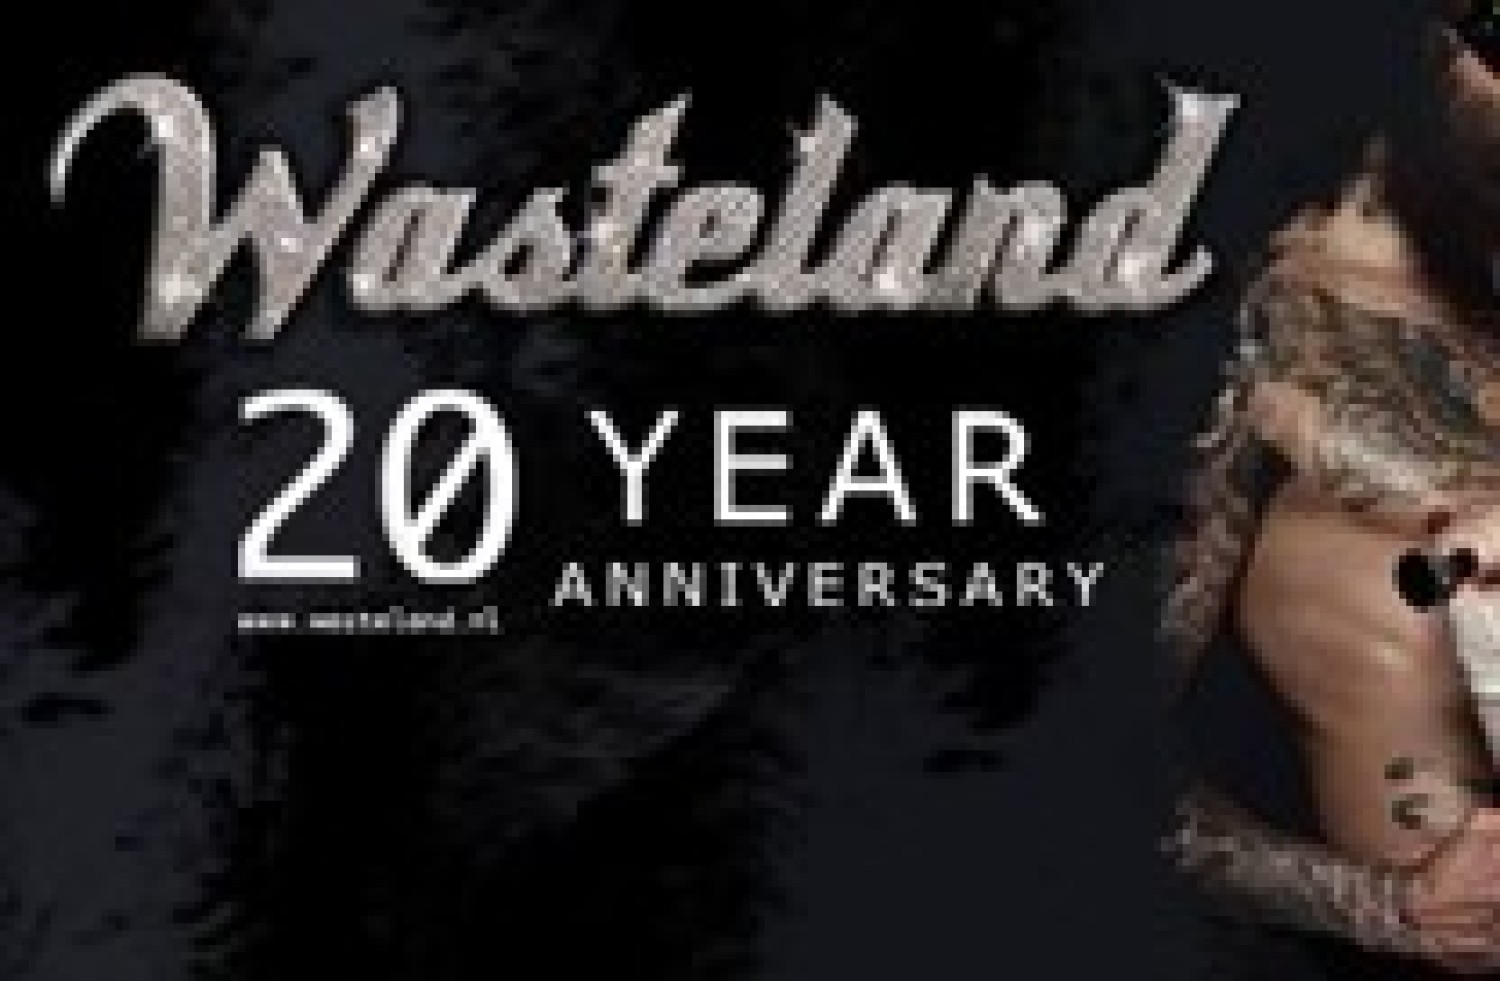 Party report: Wasteland, Zaandam (29-11-2014)